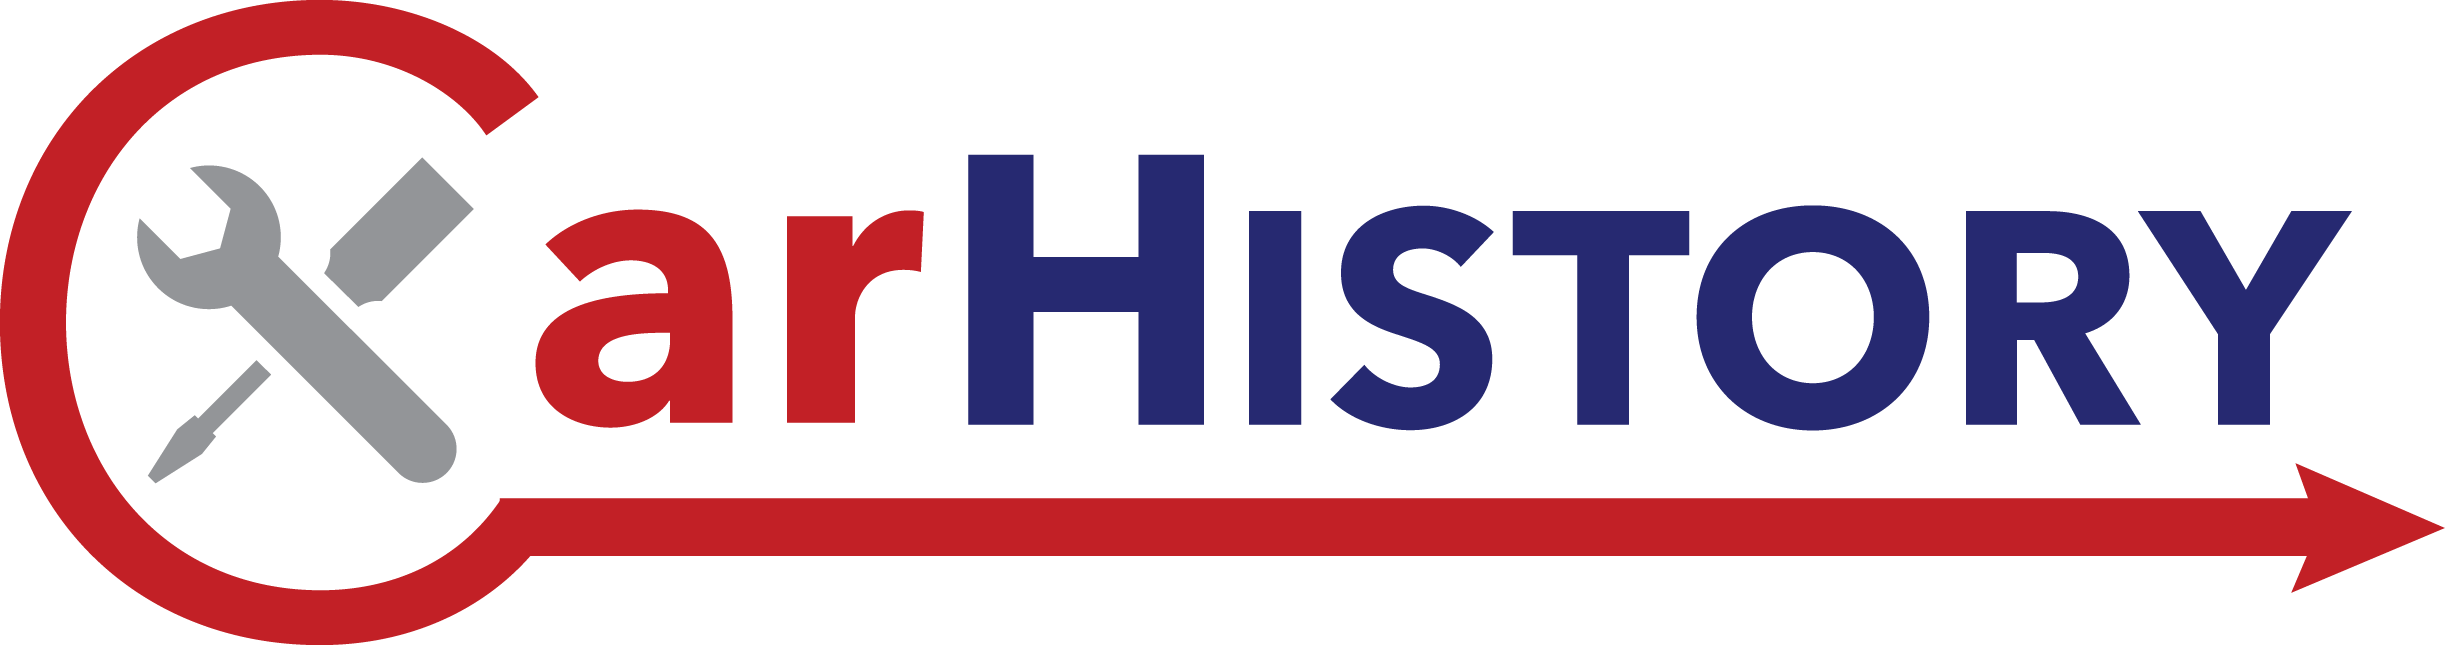 Carhistory logo